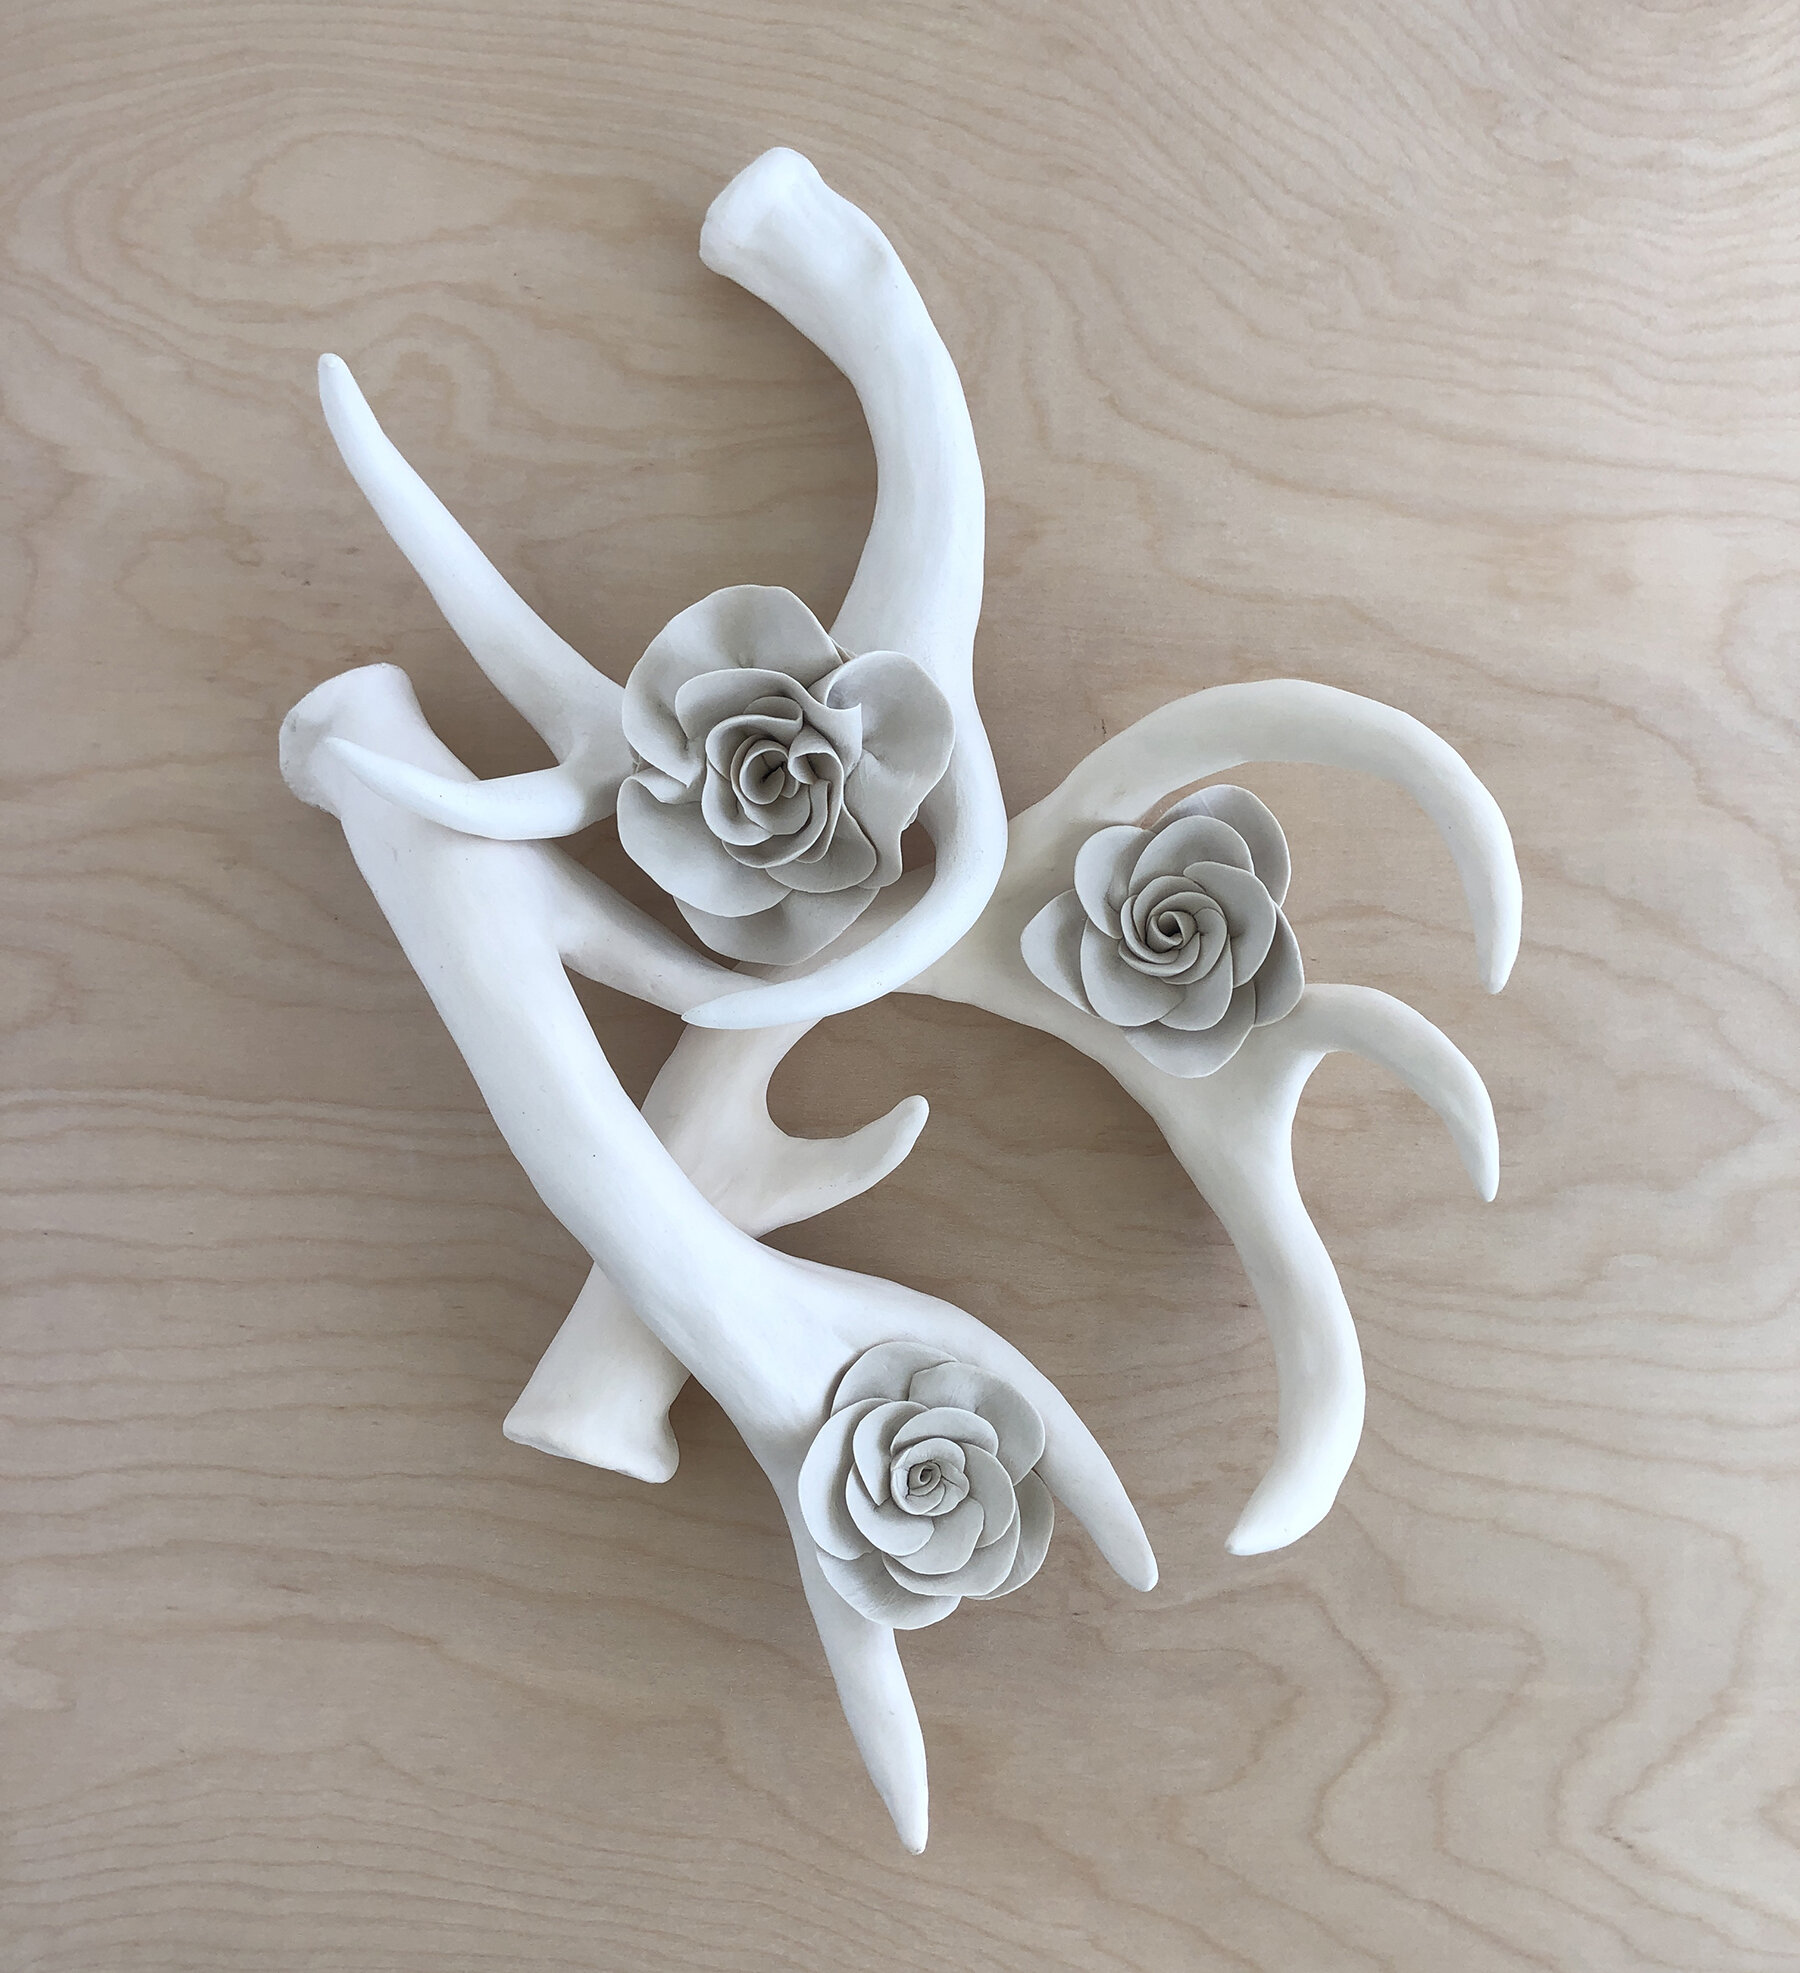 02-Ceramic-Art-BonesBlooms-3.jpg